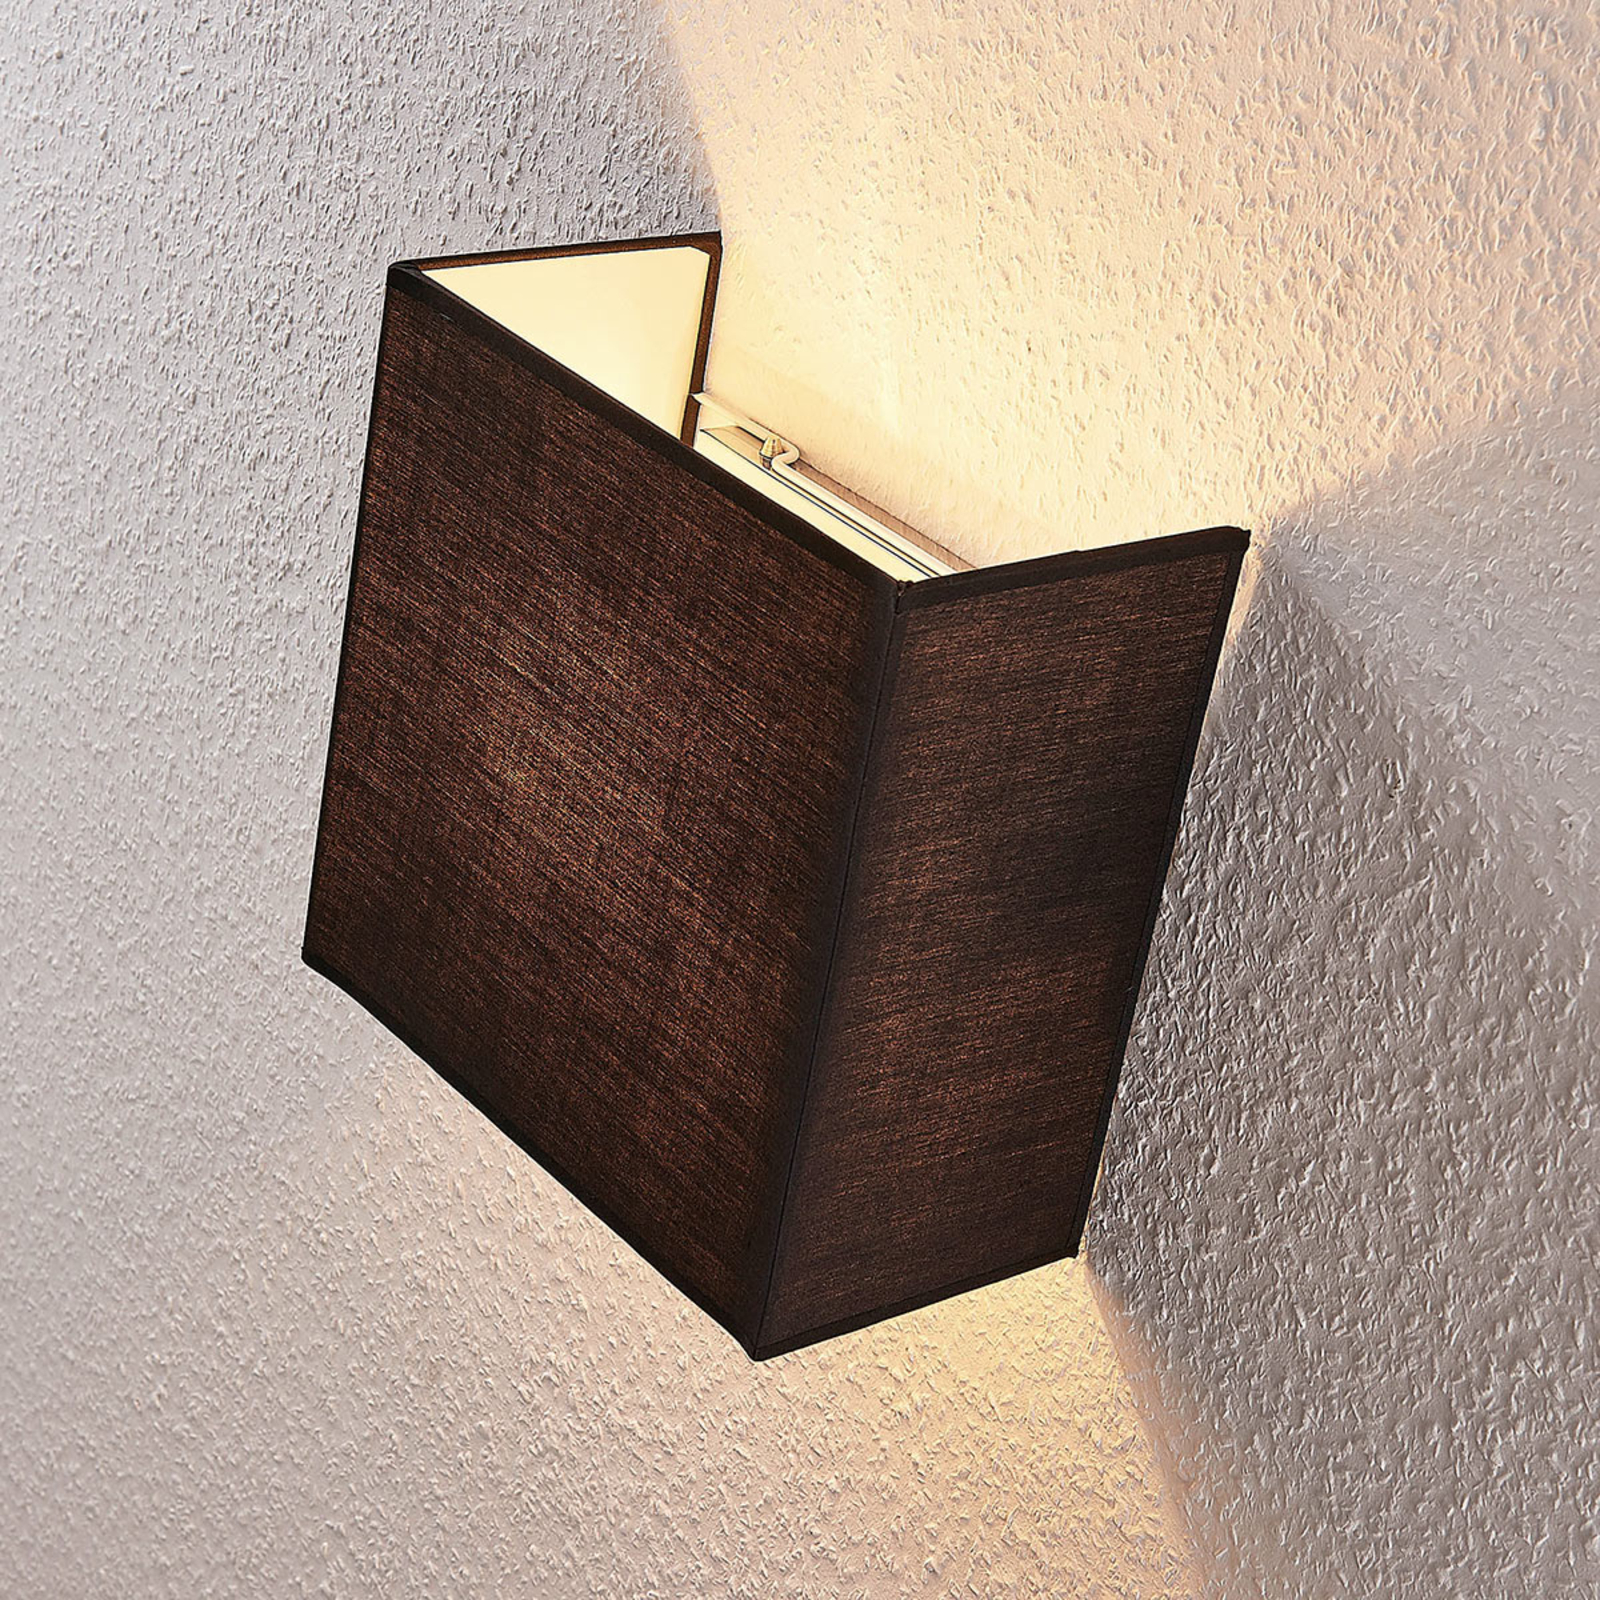 Fabric wall lamp Adea, 25 cm, square, black